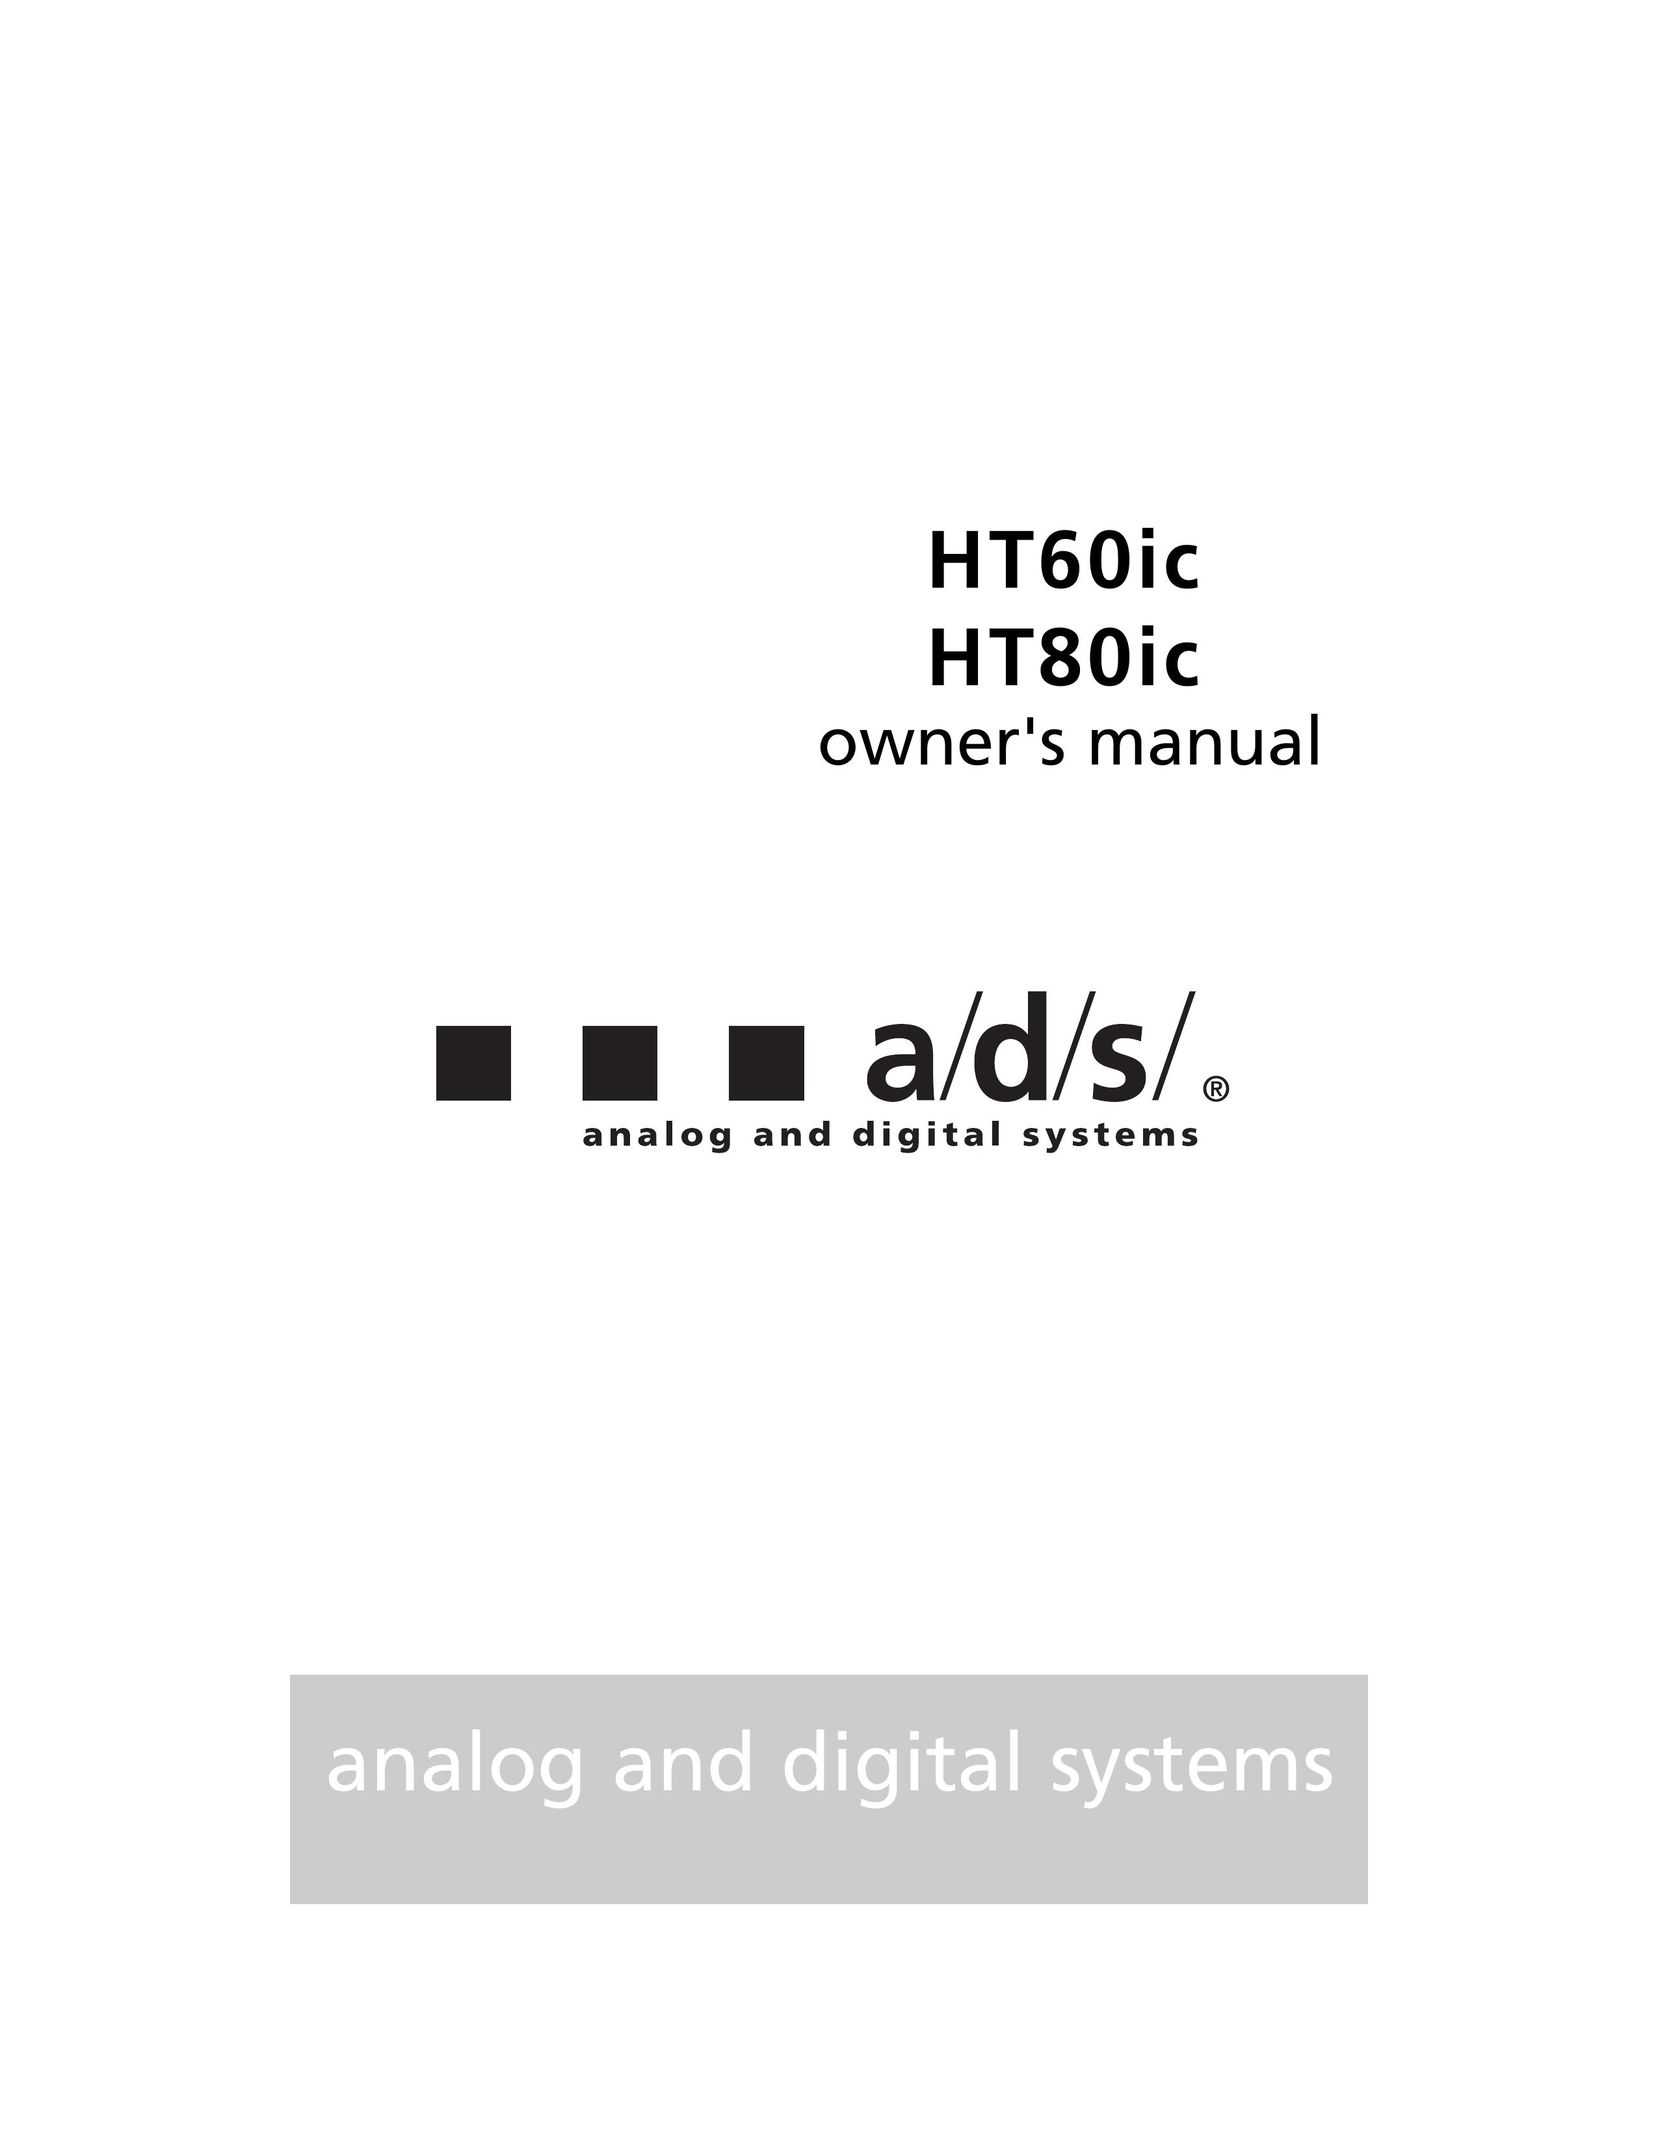 ADS Technologies HT60IC Speaker User Manual